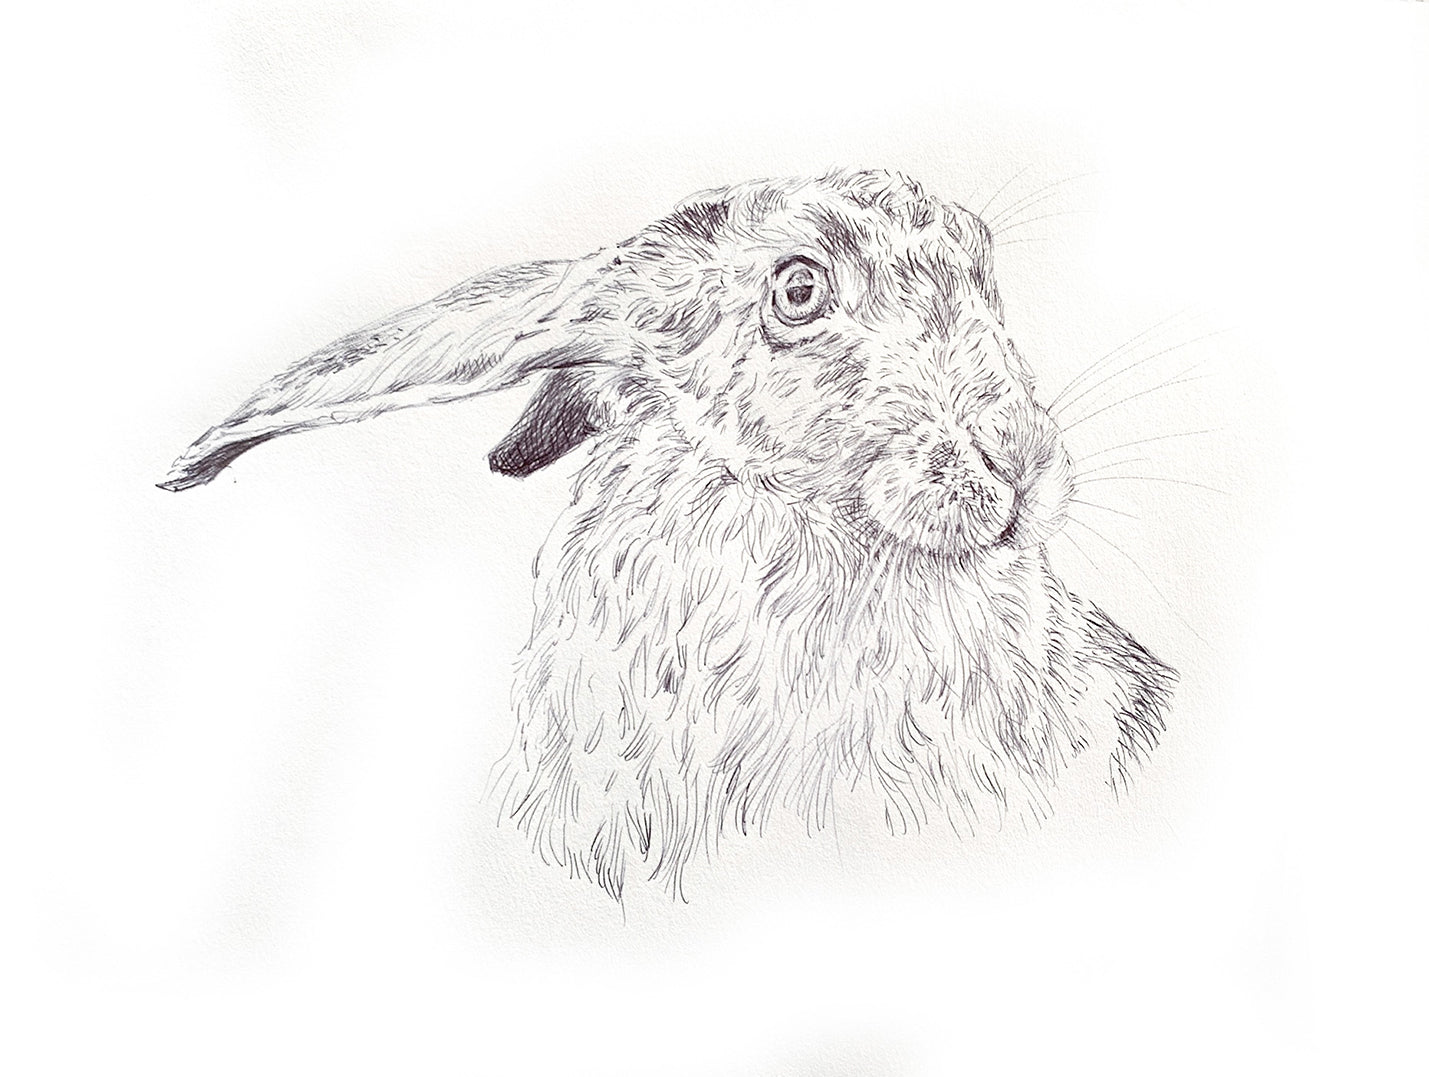 'Hare head study’ - Original Ink Drawing by David Cemmick - 30 x 35cm